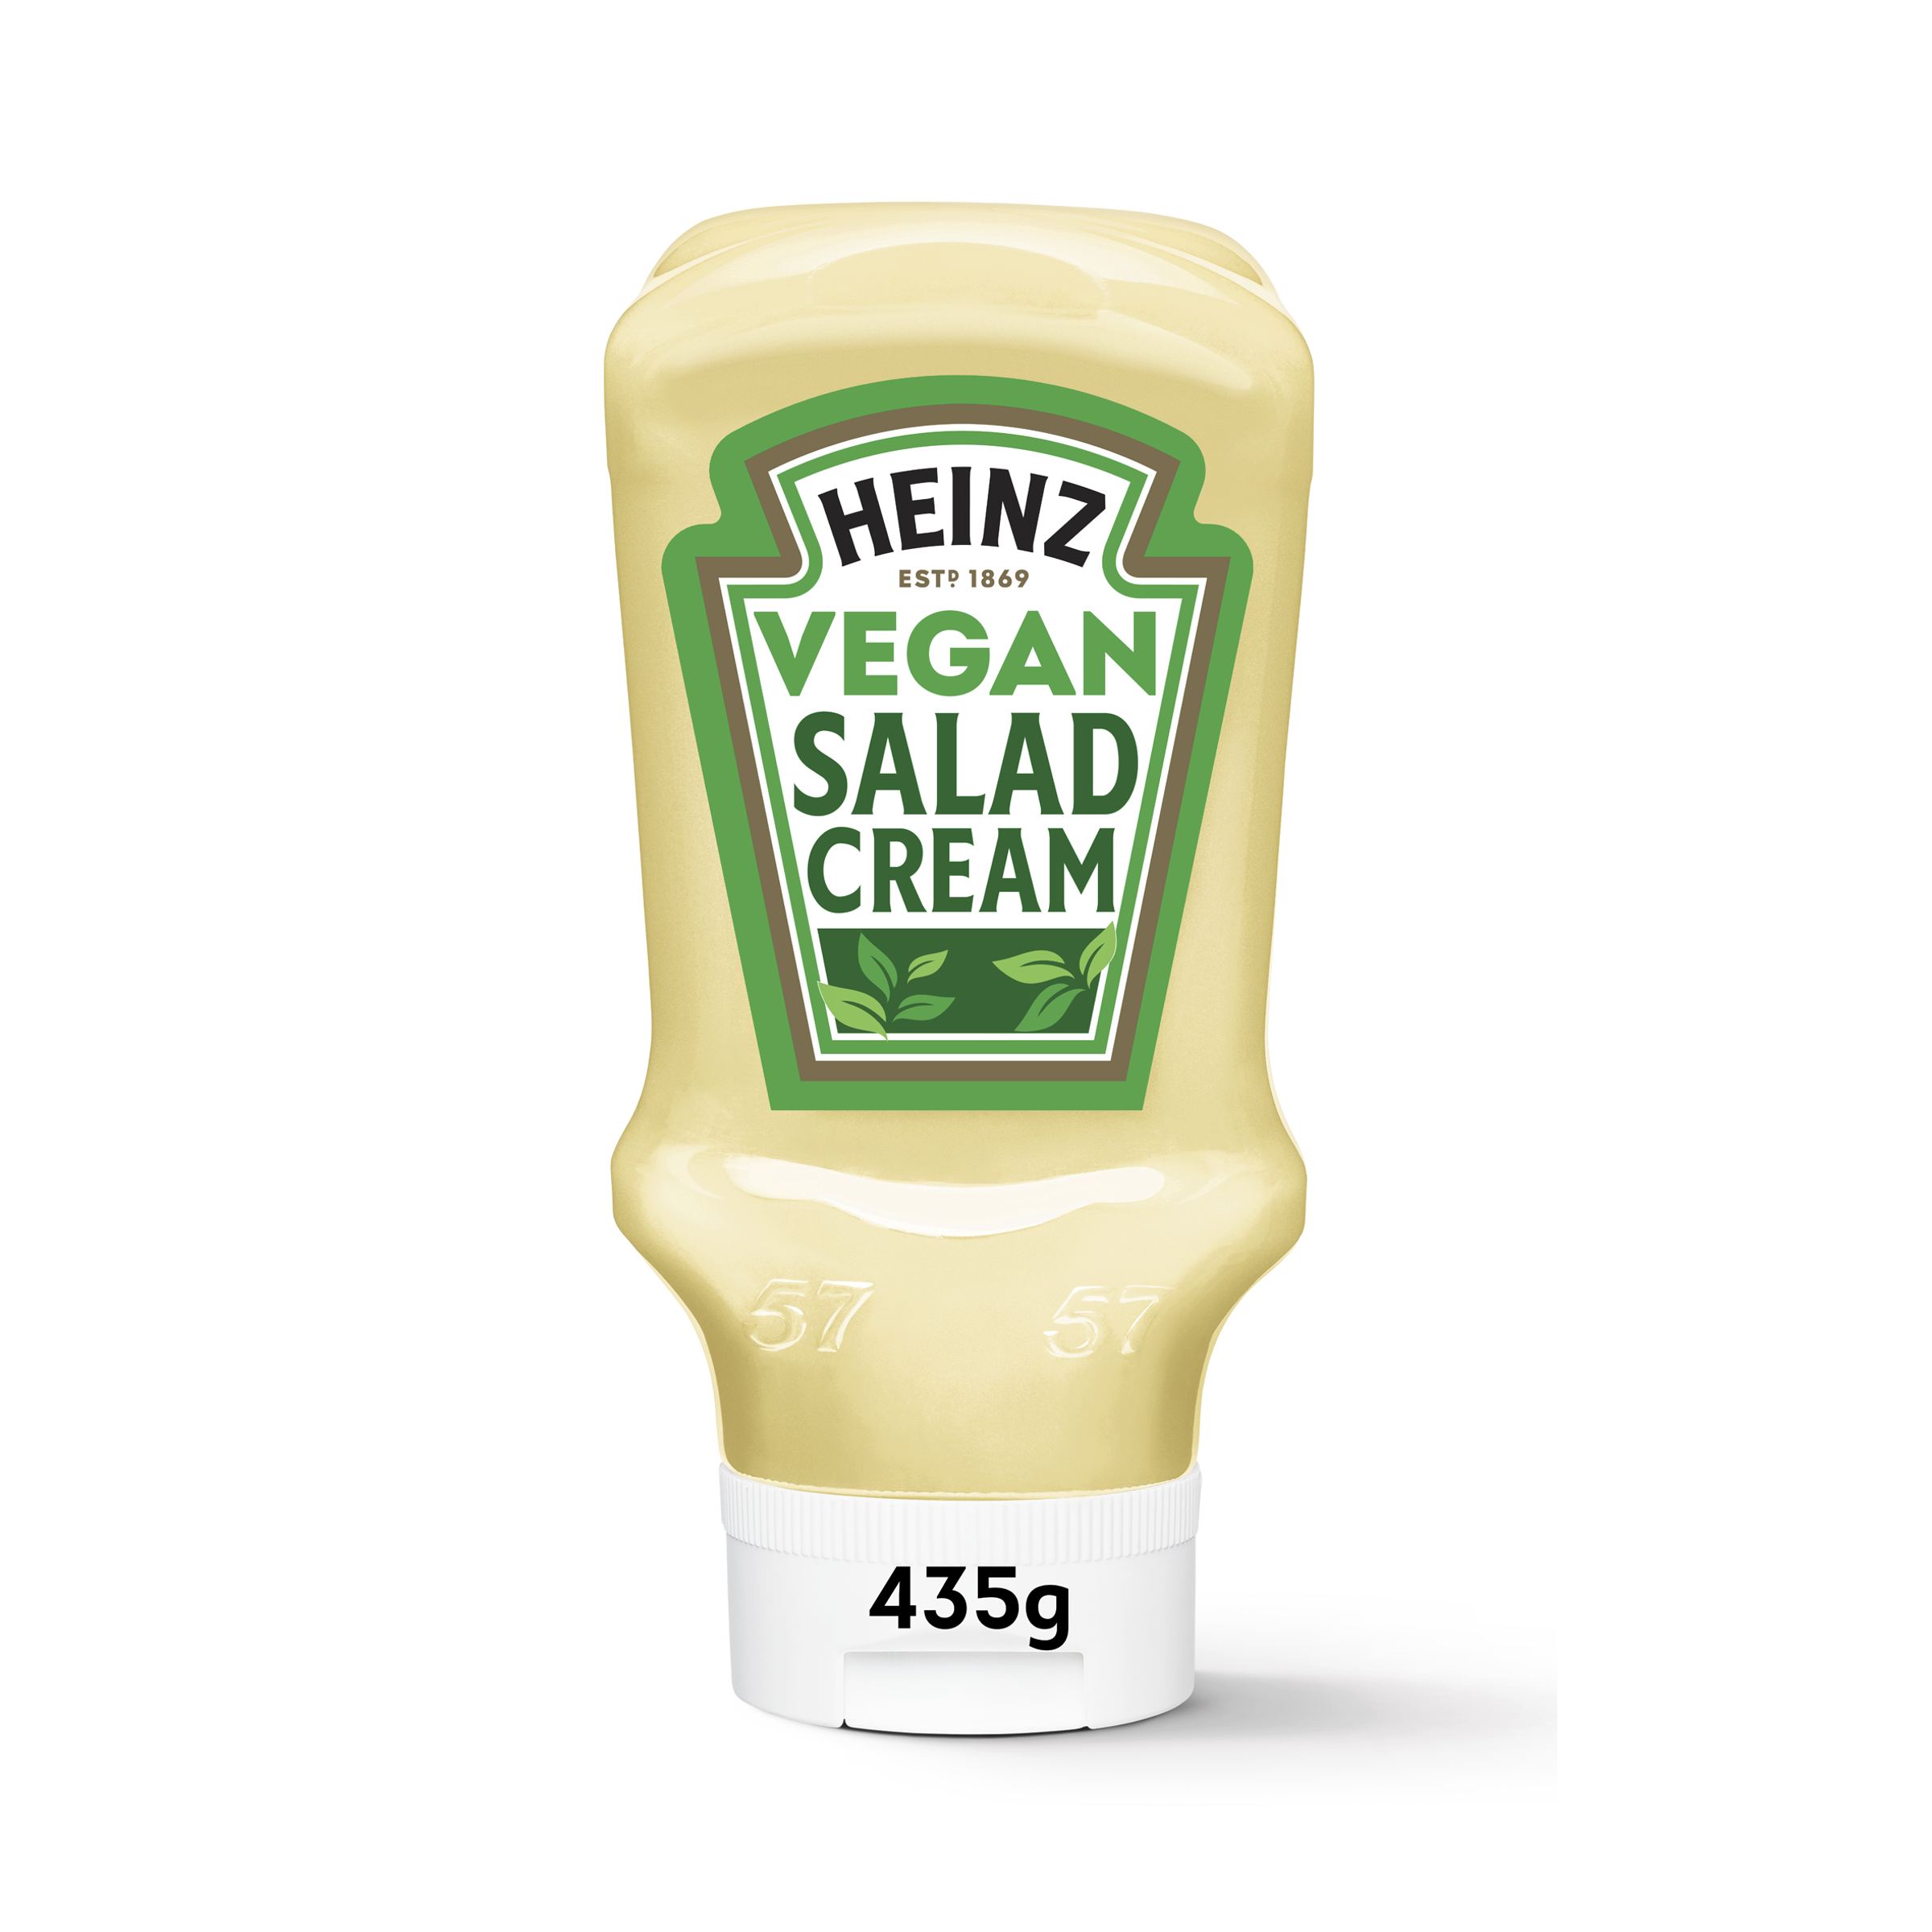 Photograph of Vegan Salad Cream 435g product